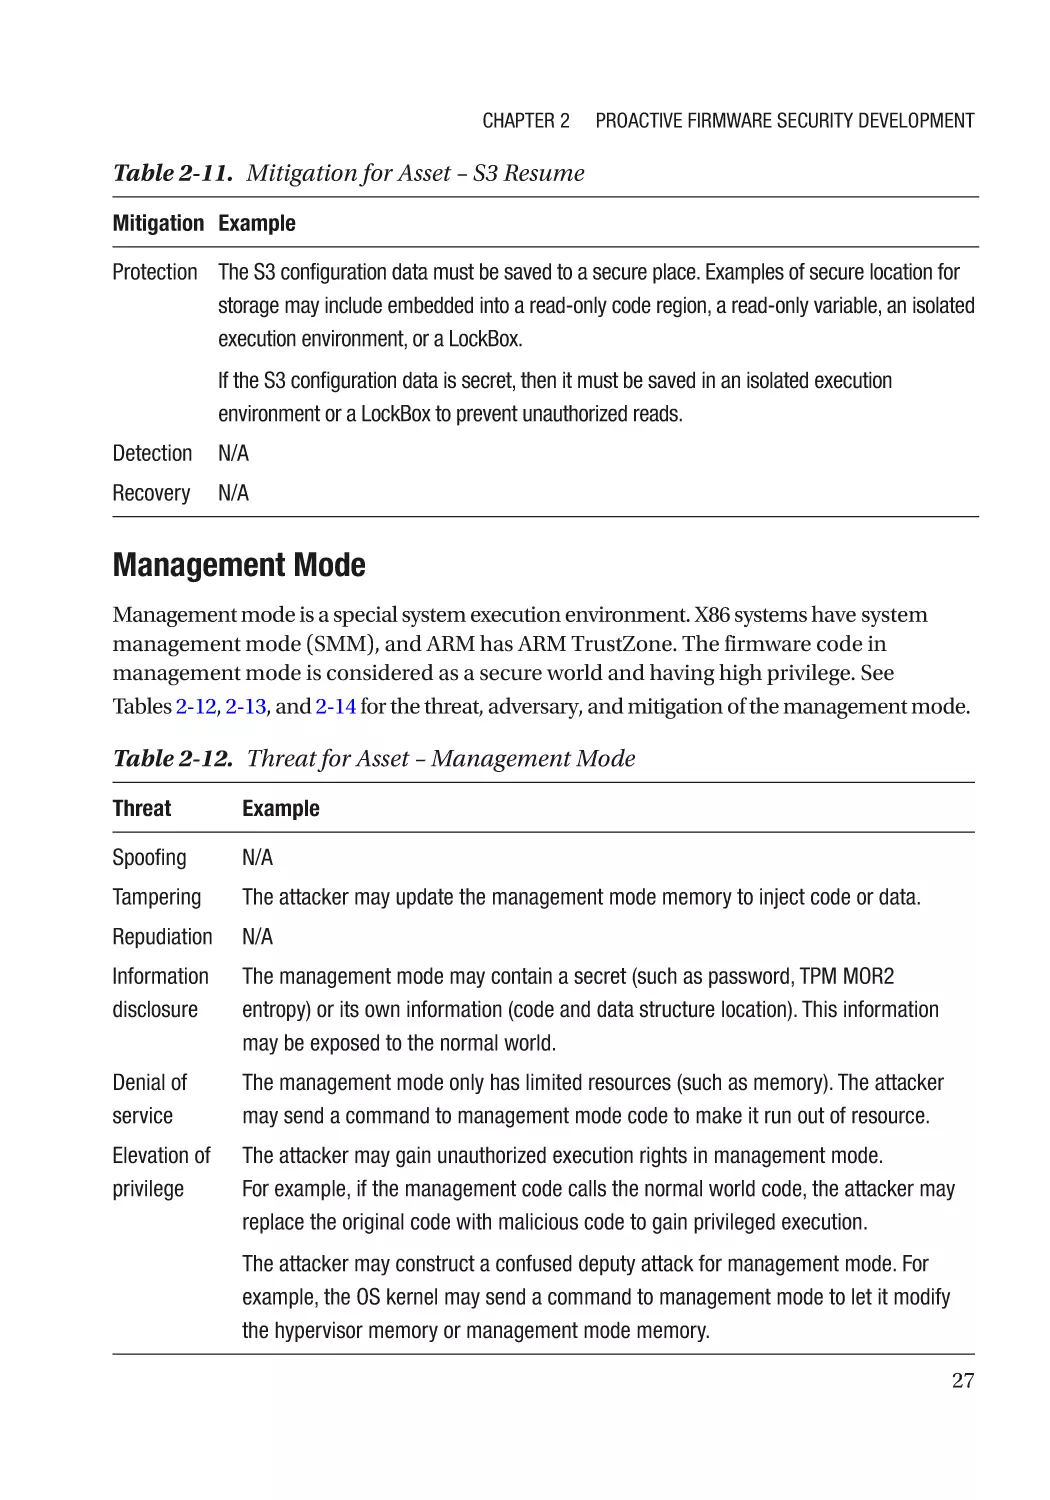 Management Mode